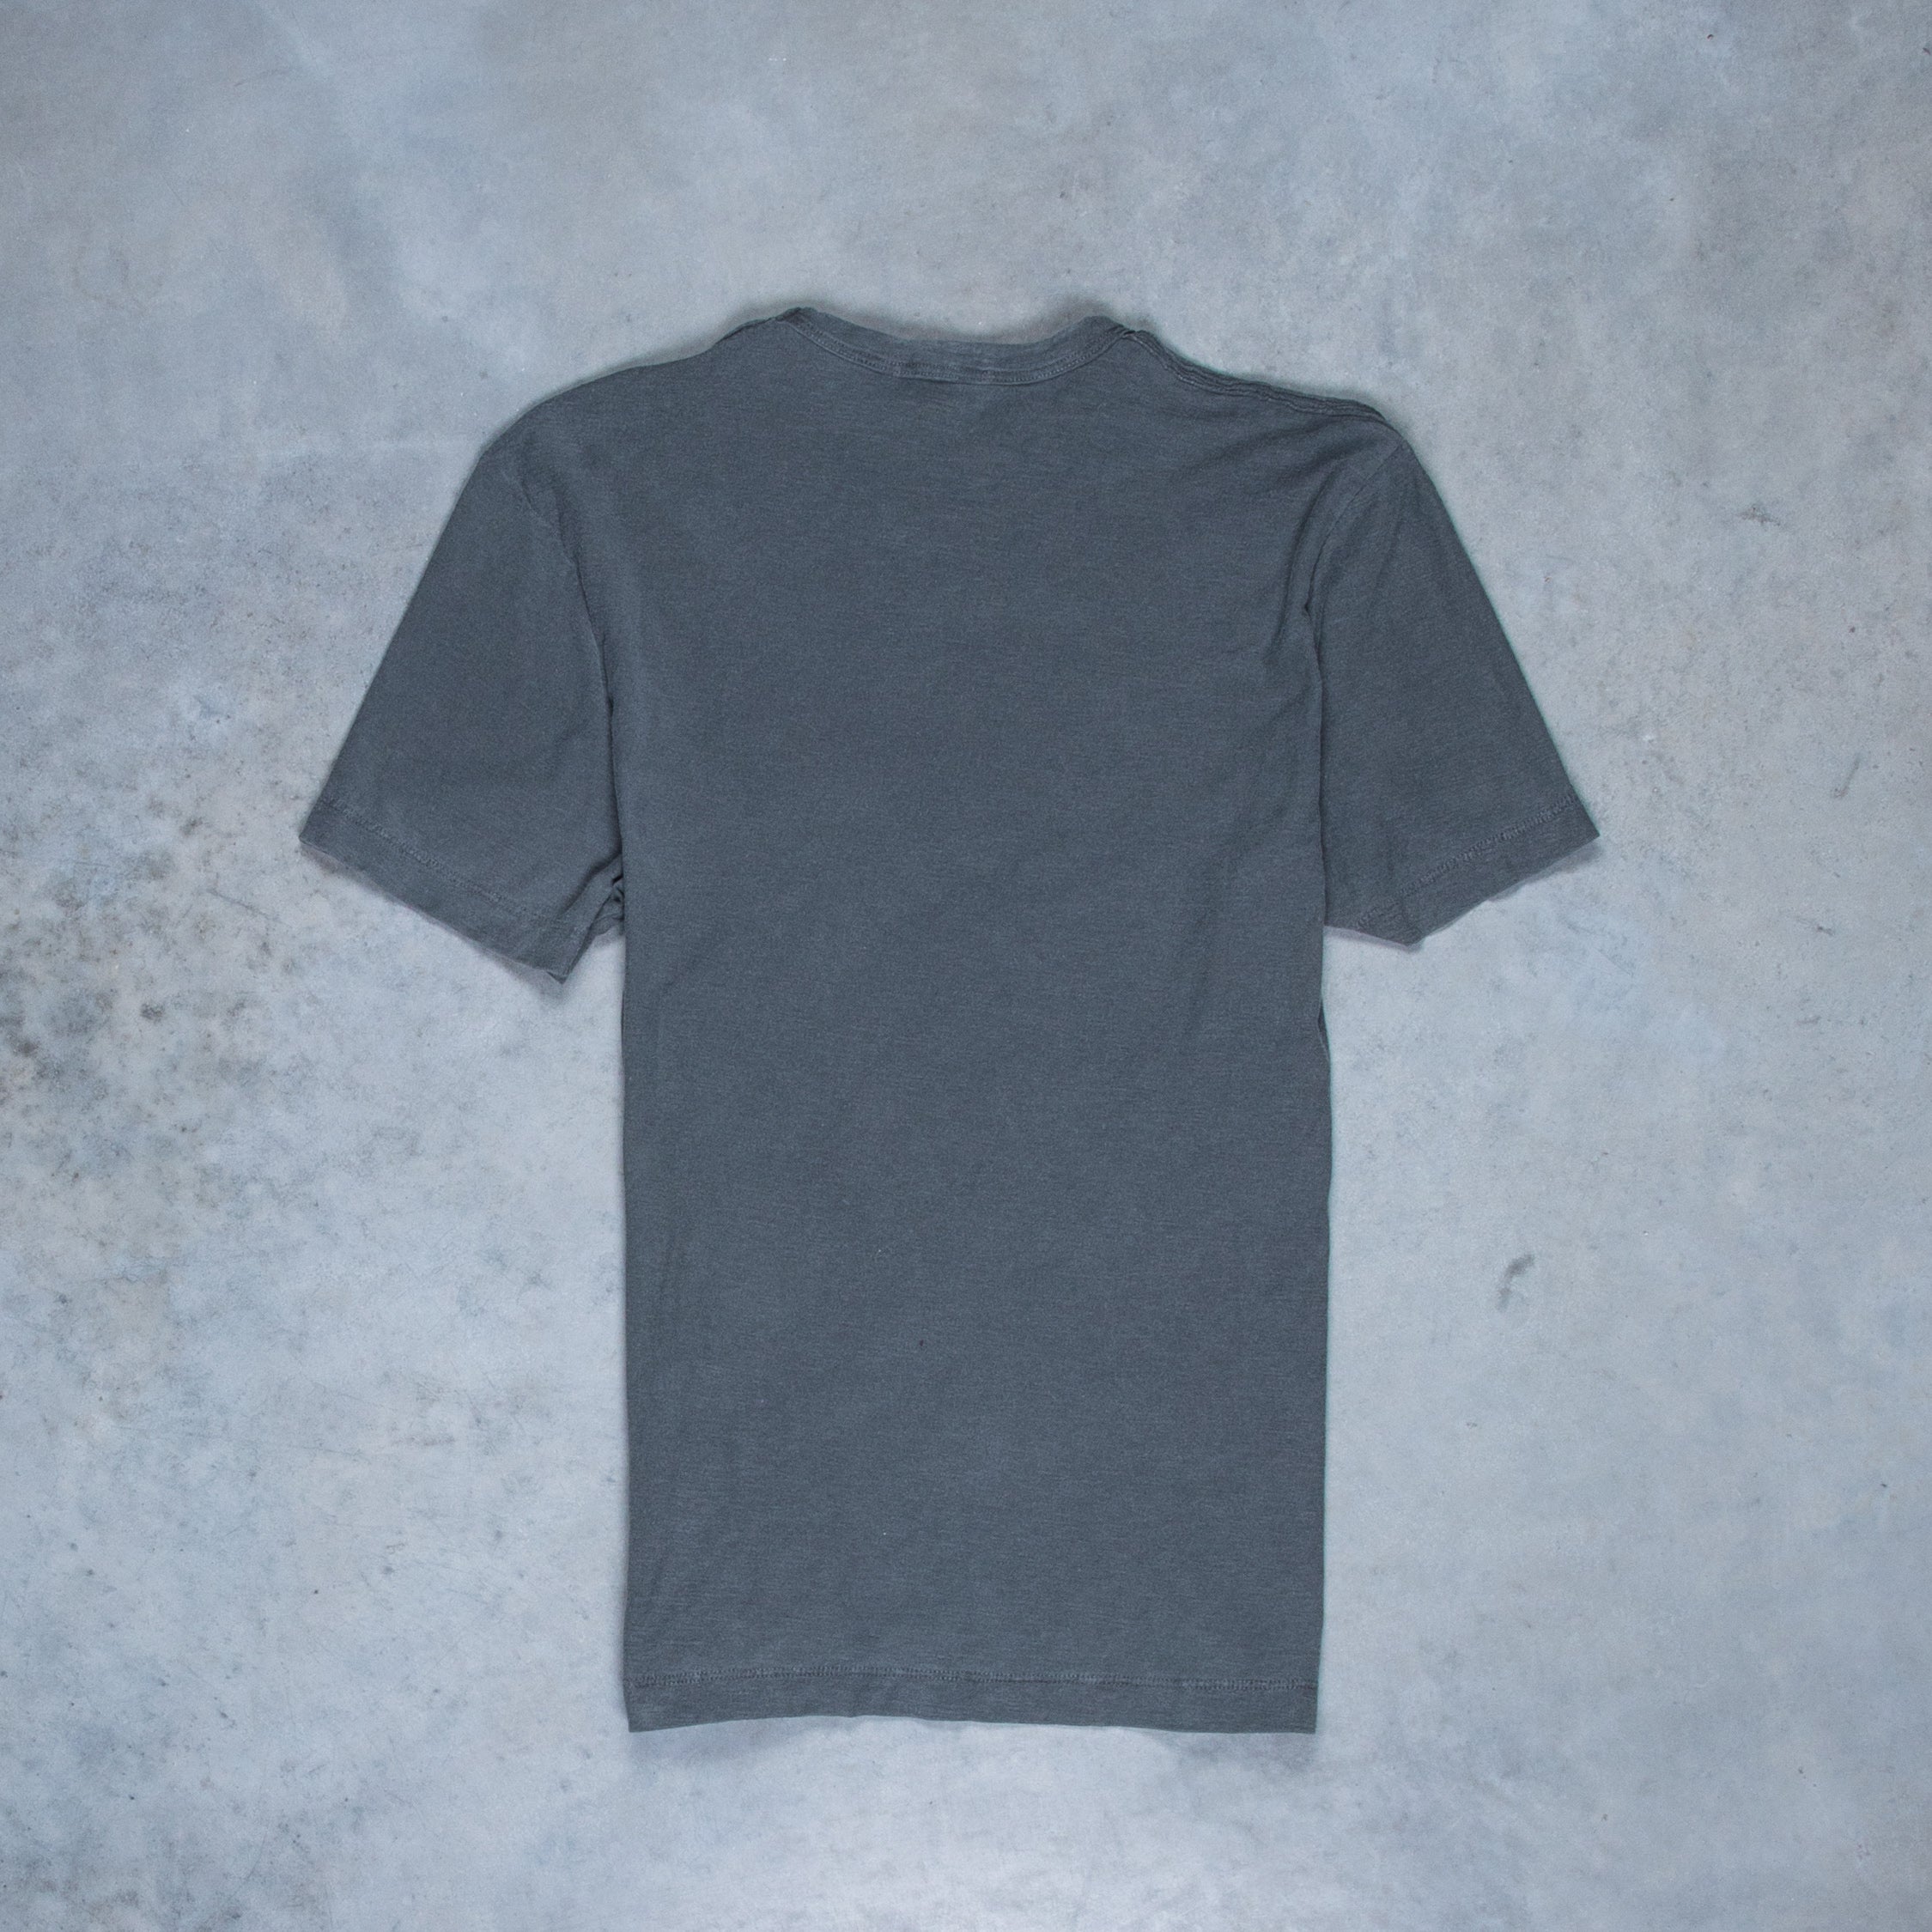 James Perse Crew Neck Reverse Slub Jersey T-Shirt Fin Pigment